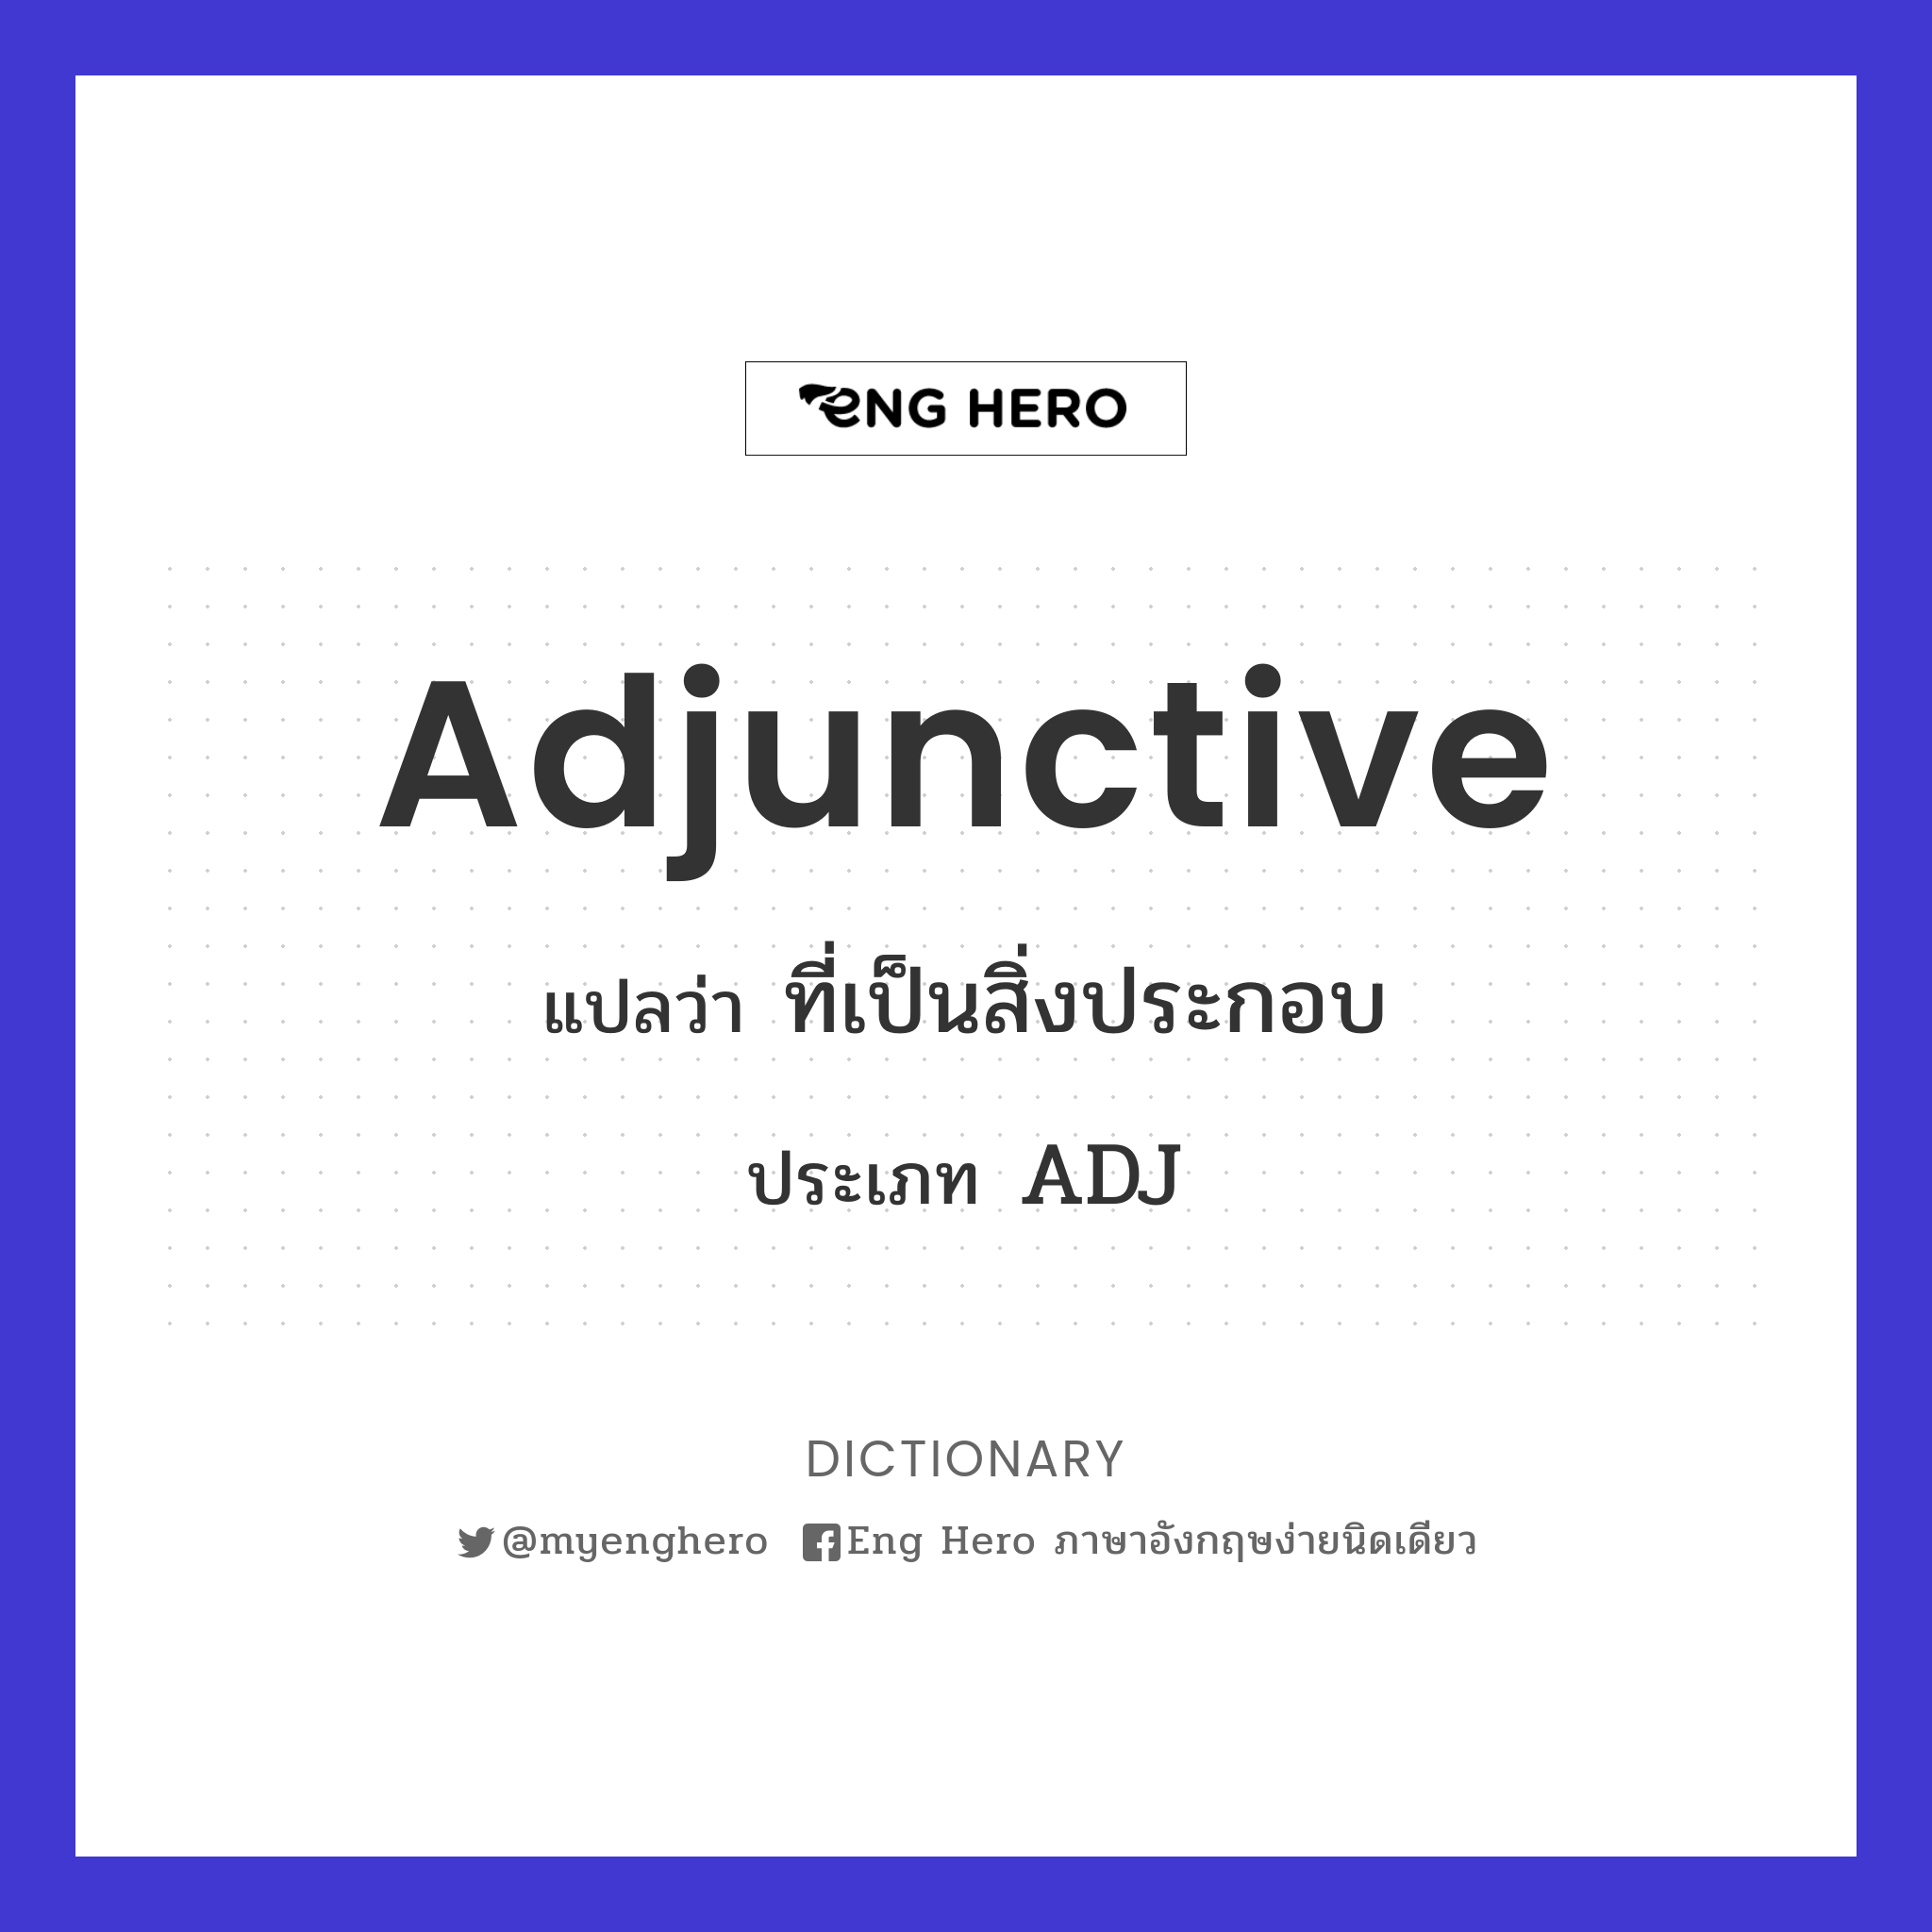 adjunctive